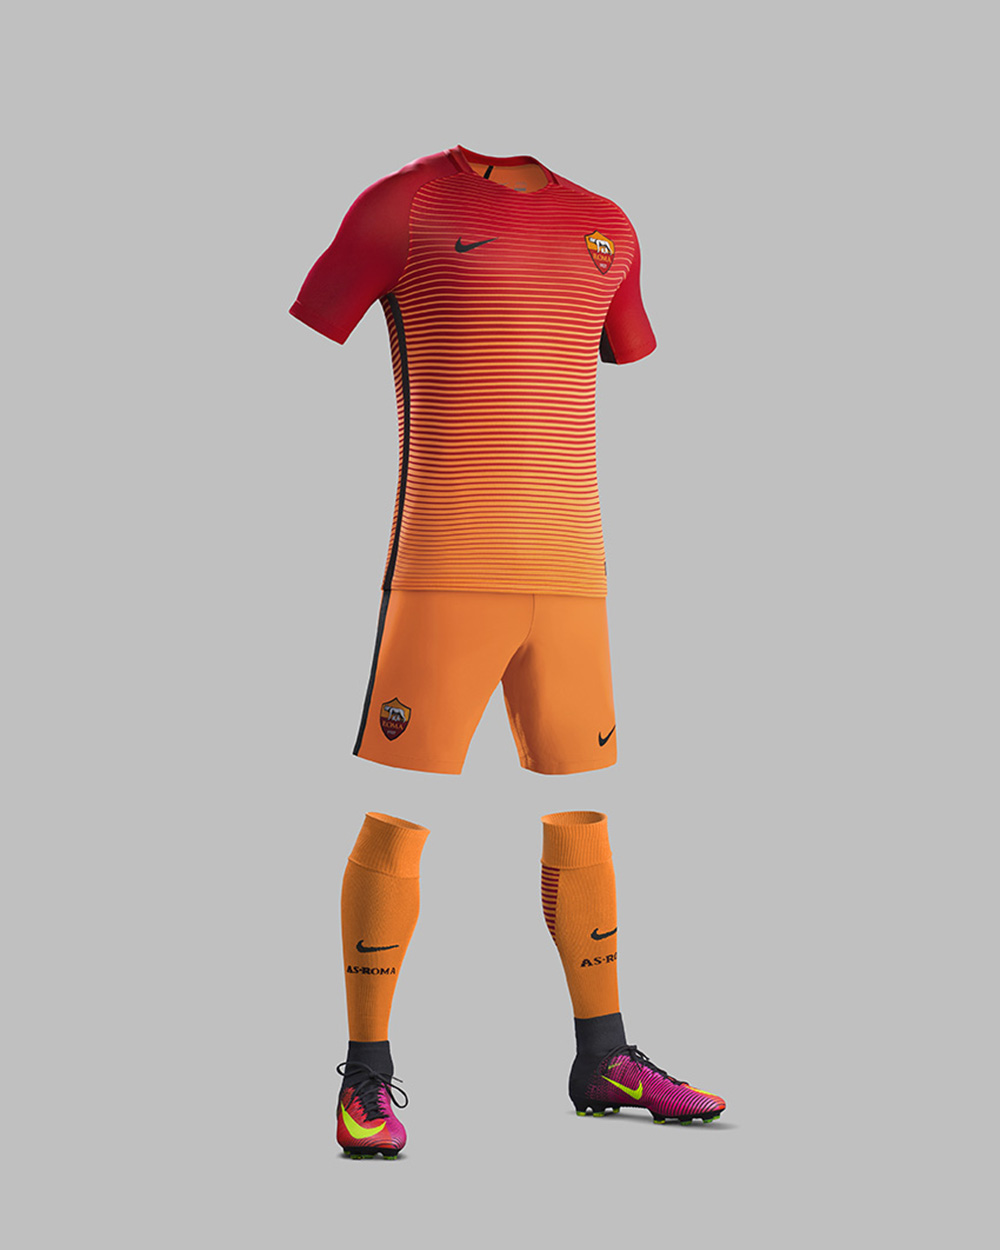 AS Roma Nike Third Kit 2016 17